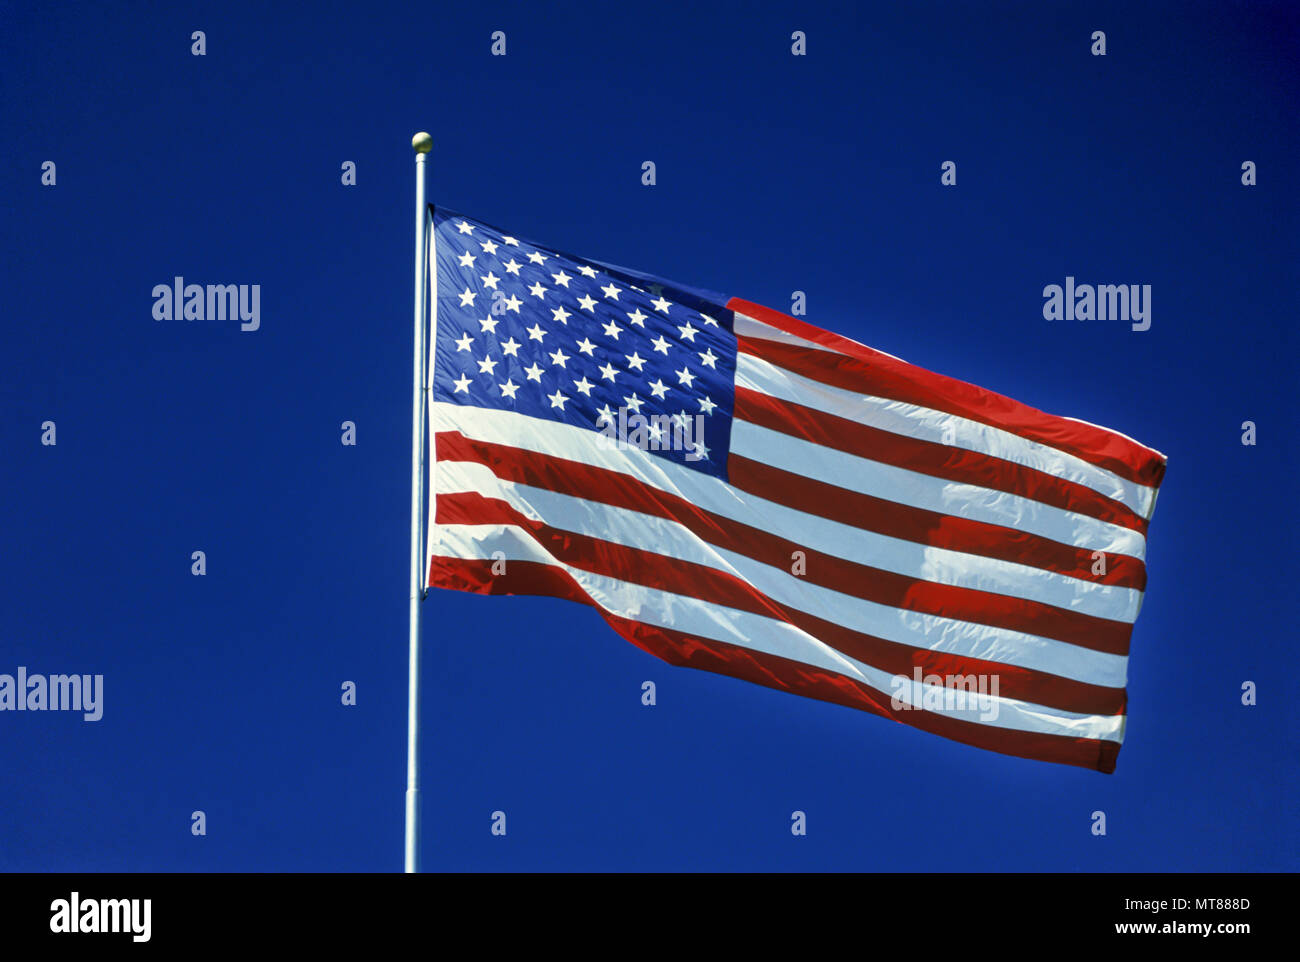 1990 HISTORICAL STARS AND STRIPES UNITED STATES FLAG FLYING ON FLAGPOLE Stock Photo